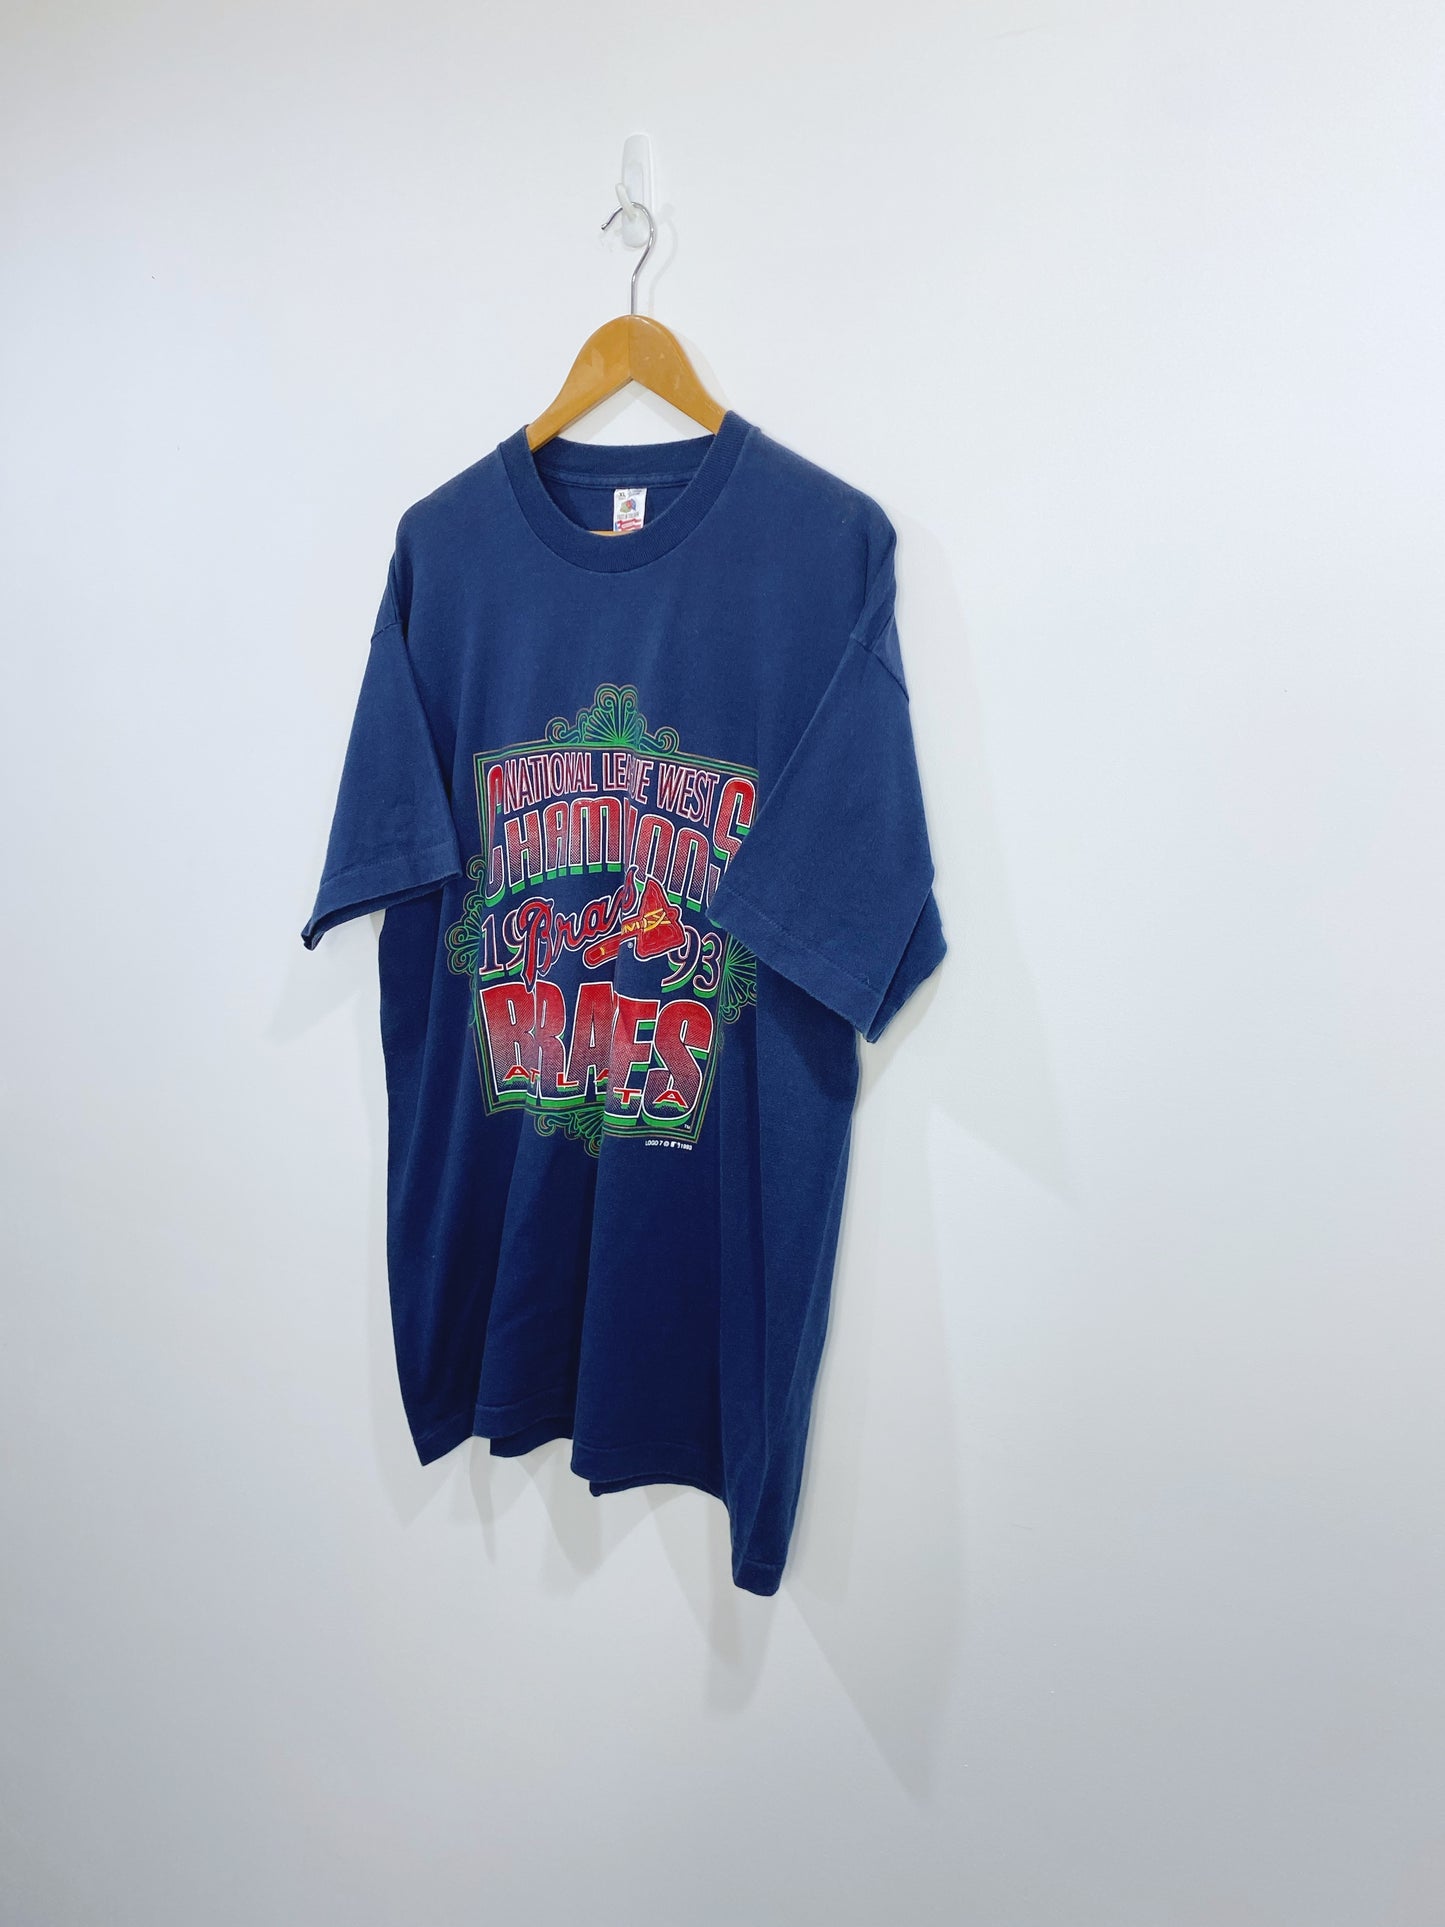 Vintage 1993 Atlanta Braves Championship T-shirt XL